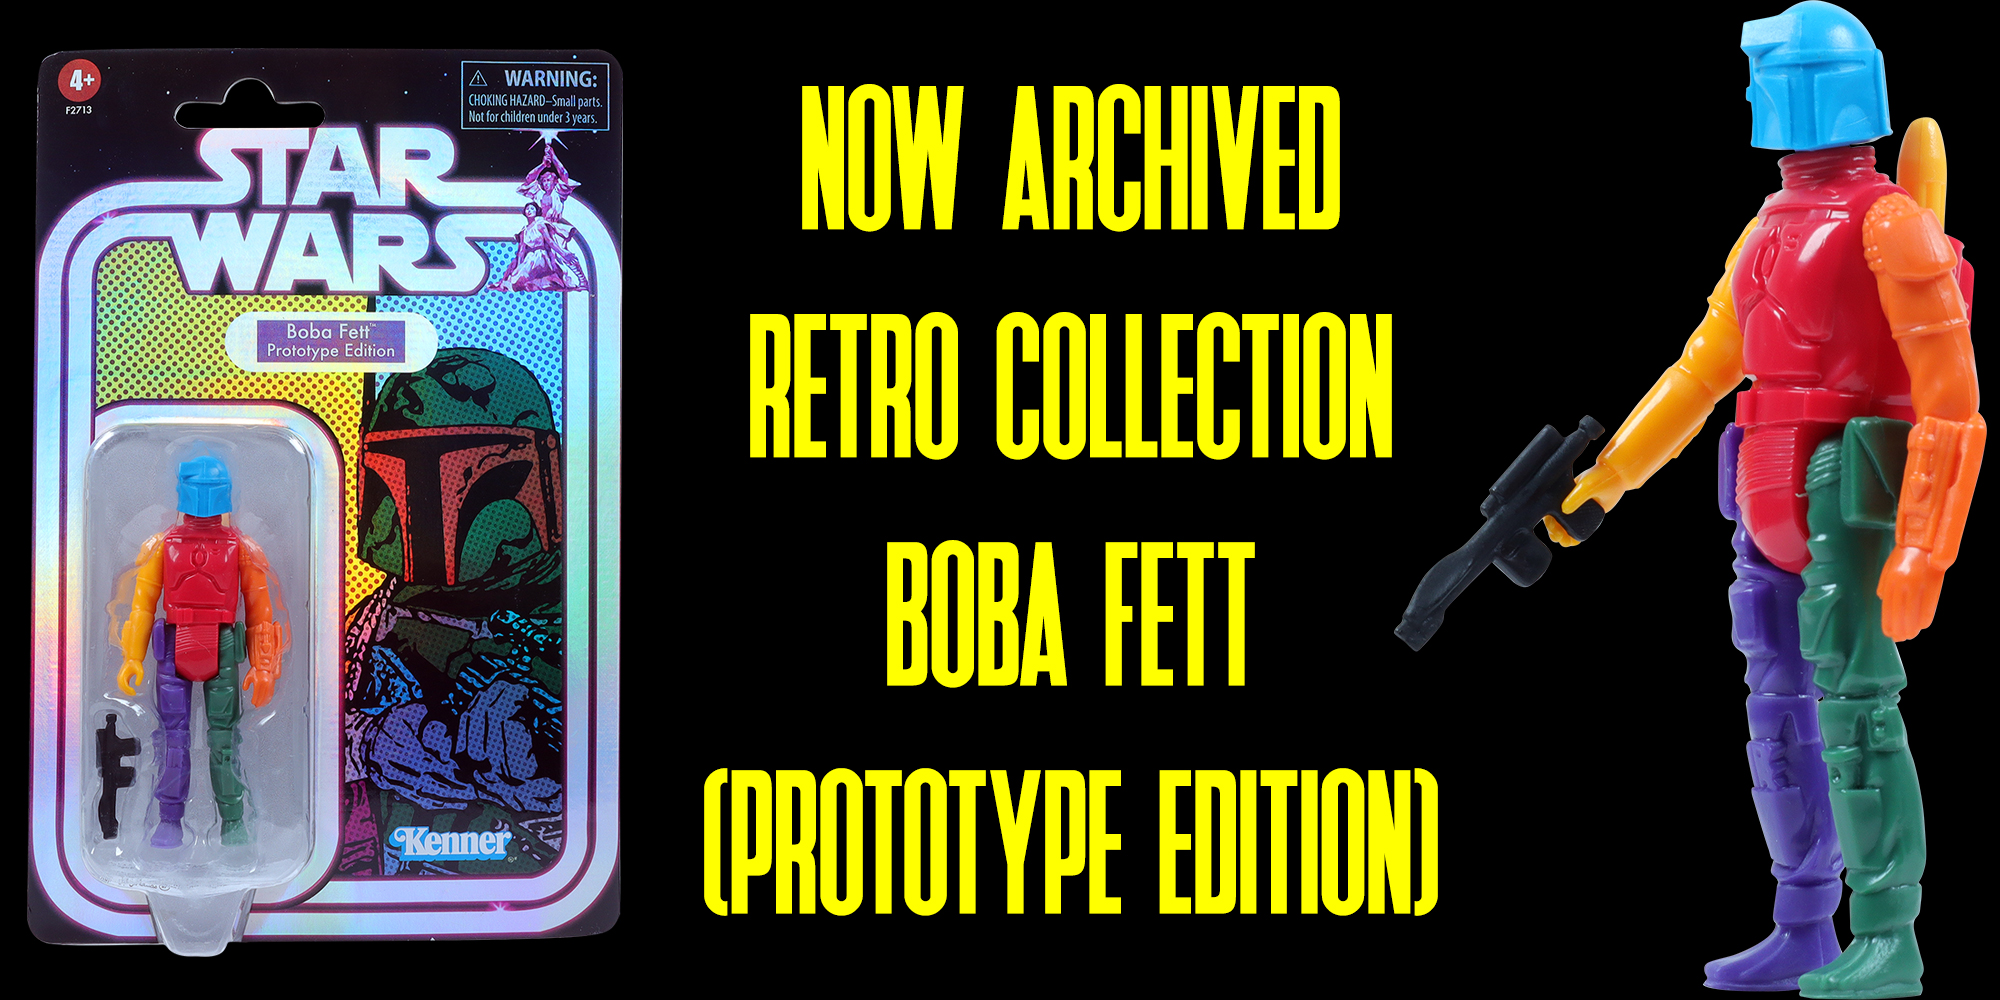 Star Wars Hasbro Retro Collection Serie Prototype Edition Boba Fett 